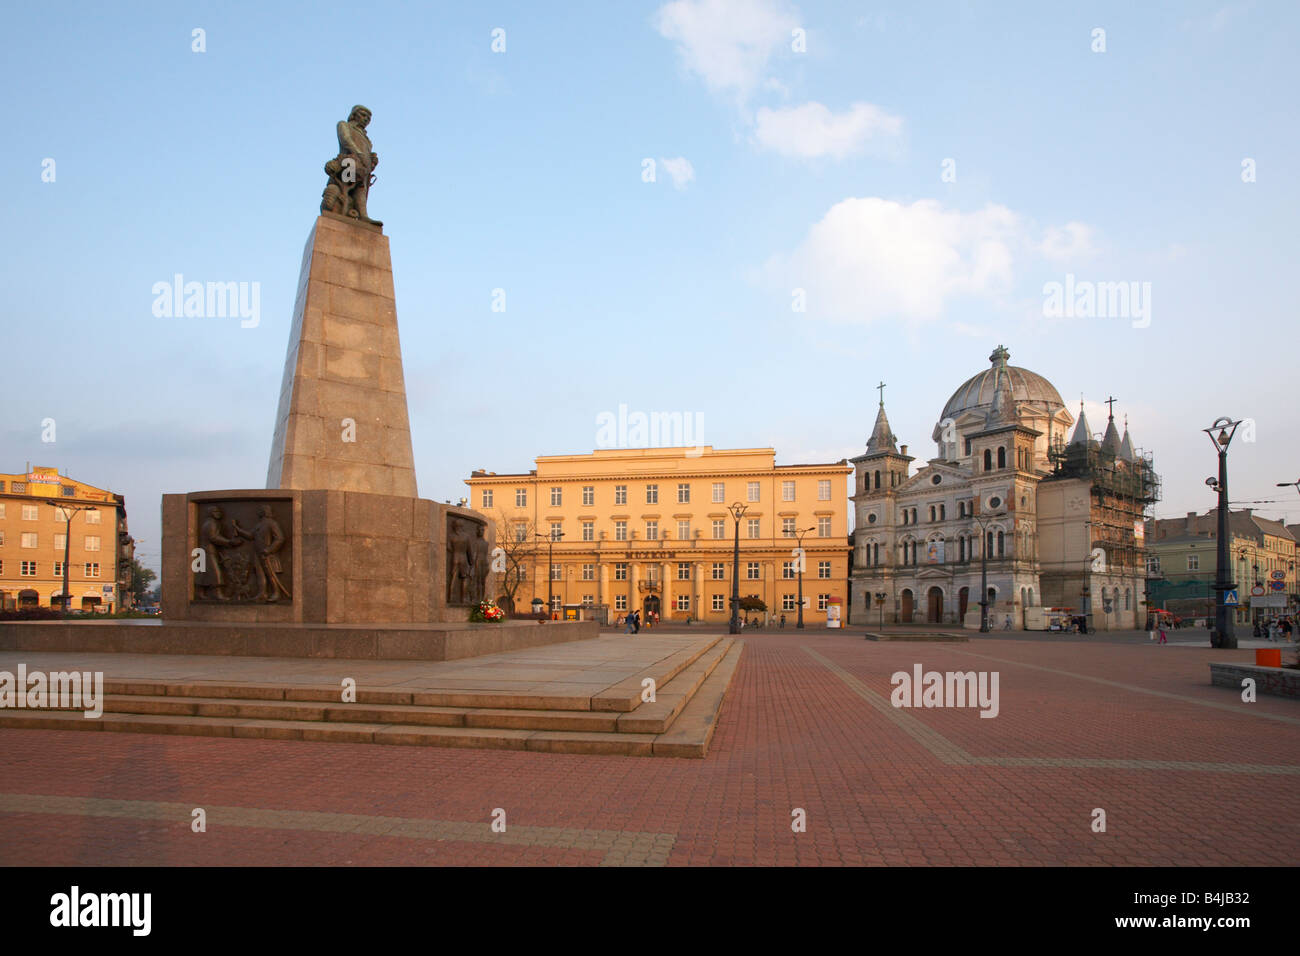 Poland West Mazovia Lodz Plac Wolnosci (Liberty Square) Statue of Tadeusz Kosciuszko Stock Photo